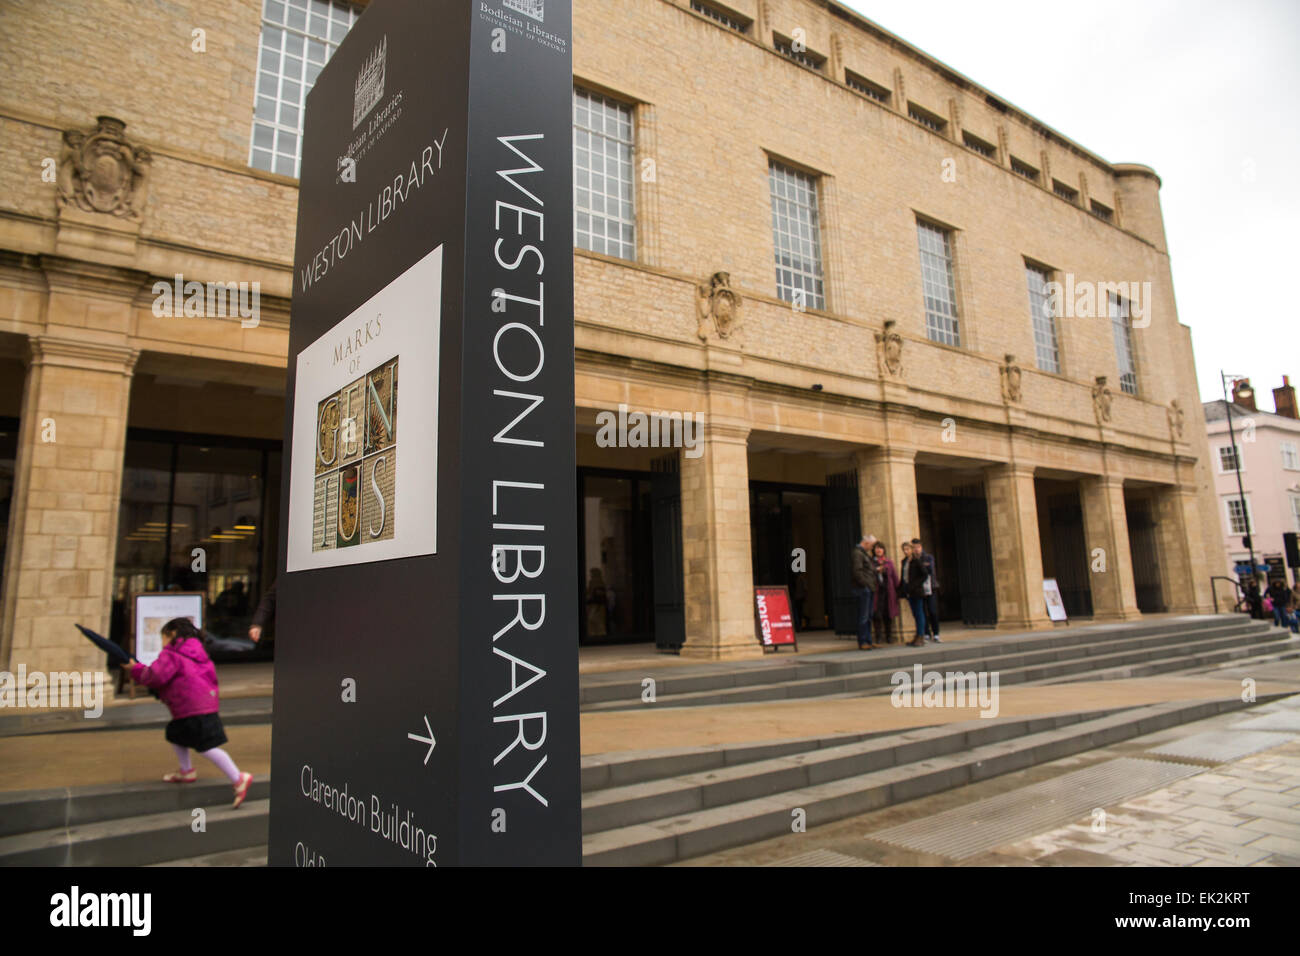 The new Weston Library, university of Oxford, Oxford, England Stock Photo